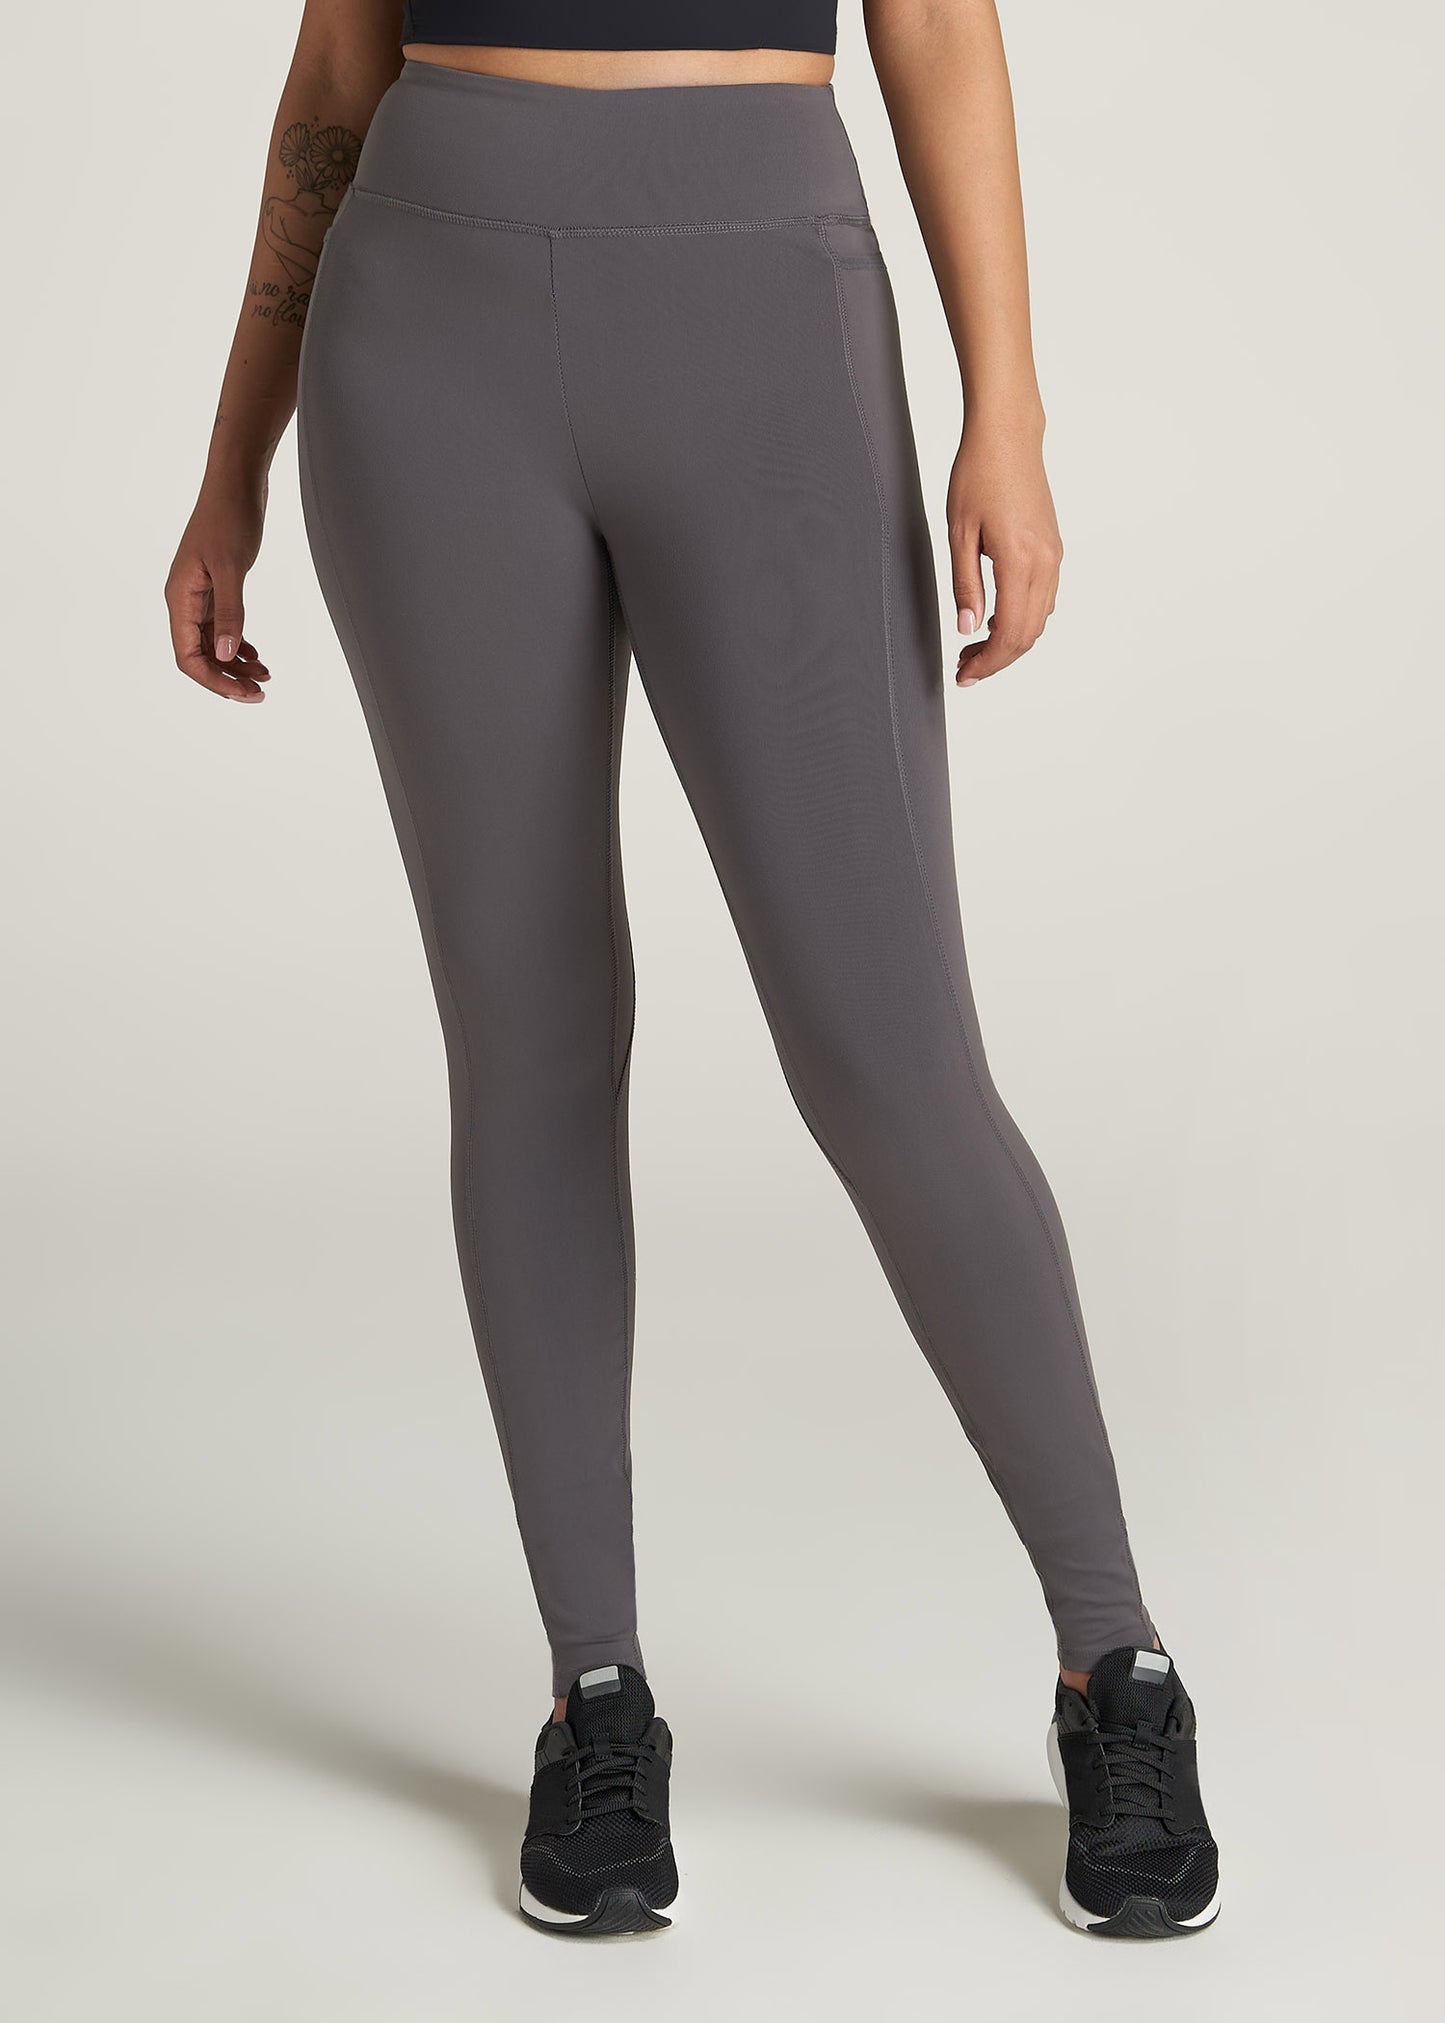 Charcoal Gray High Waist Leggings With Tech Pockets Size Large - Walmart.com